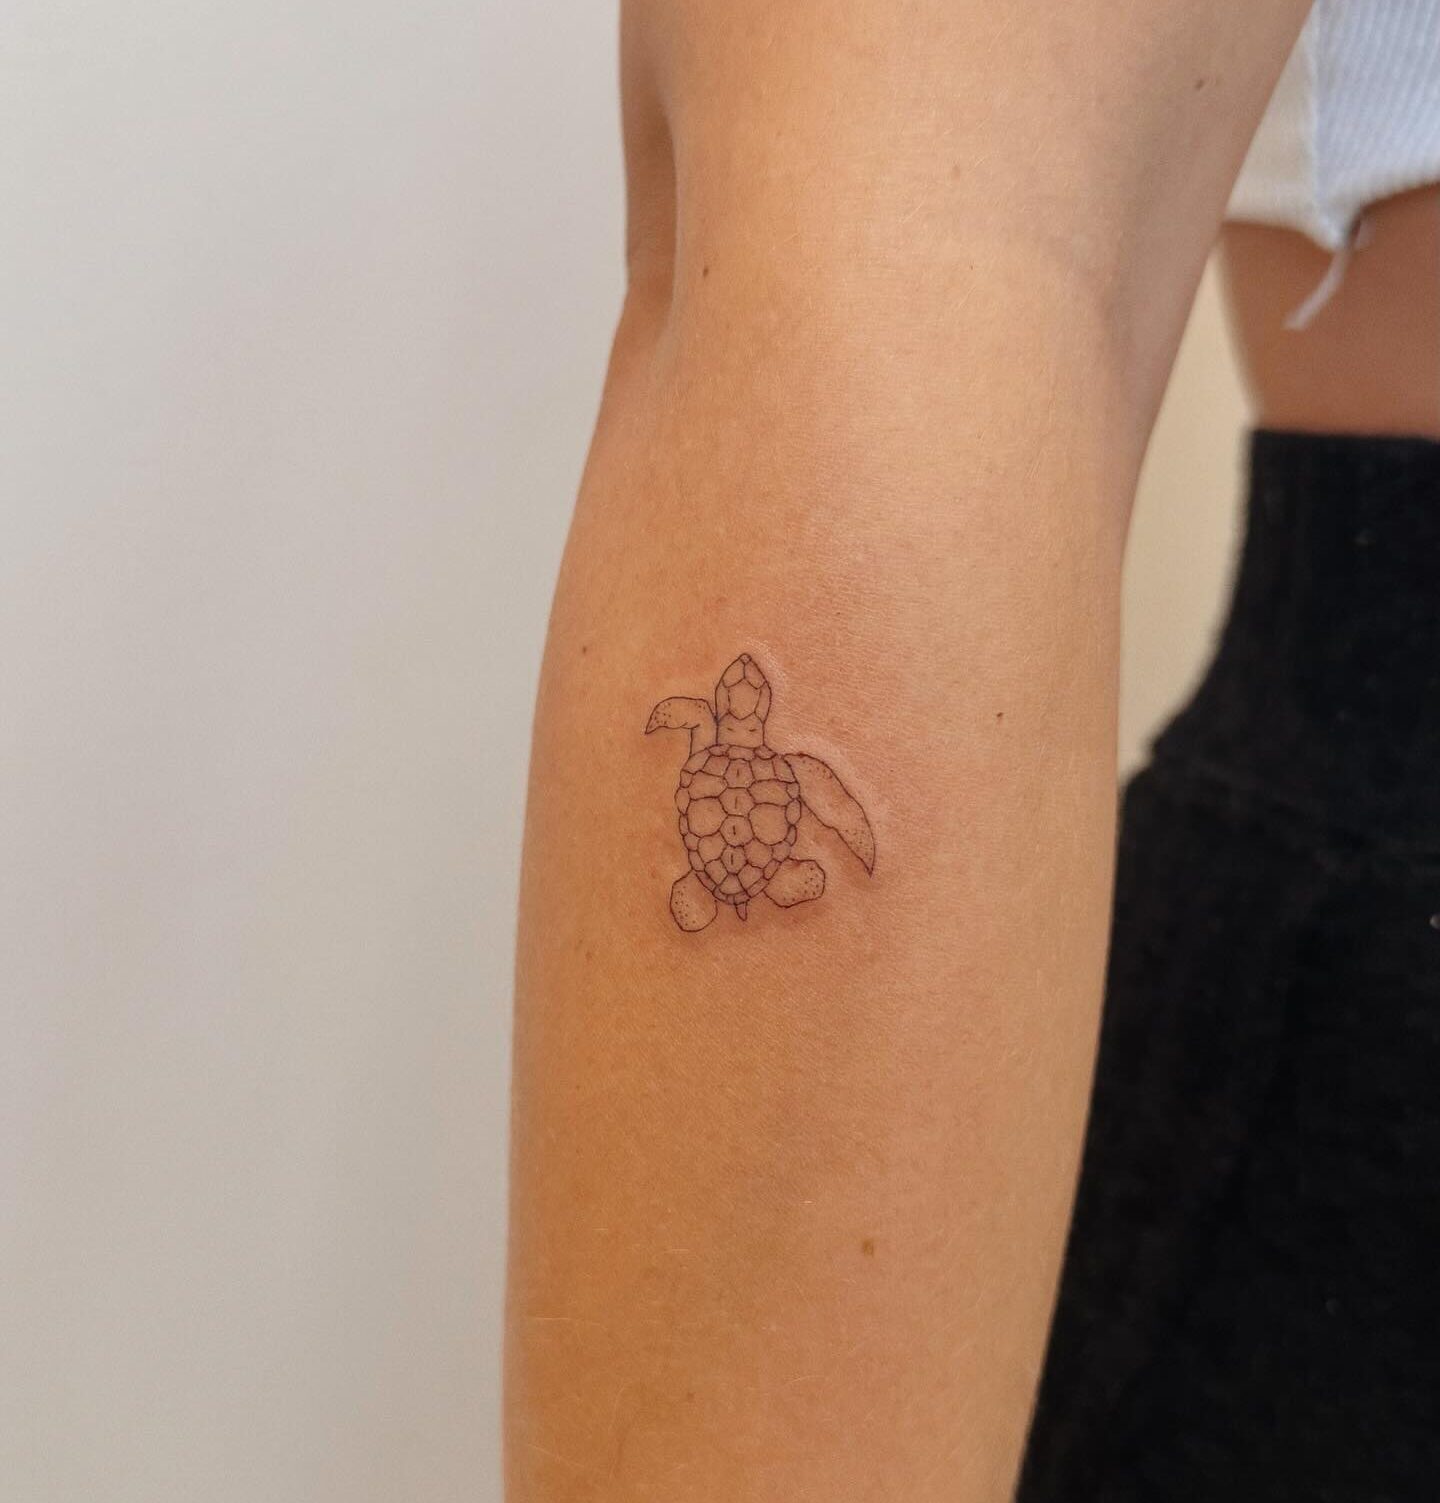 Fine line style small sea turtle tattoo on the forearm